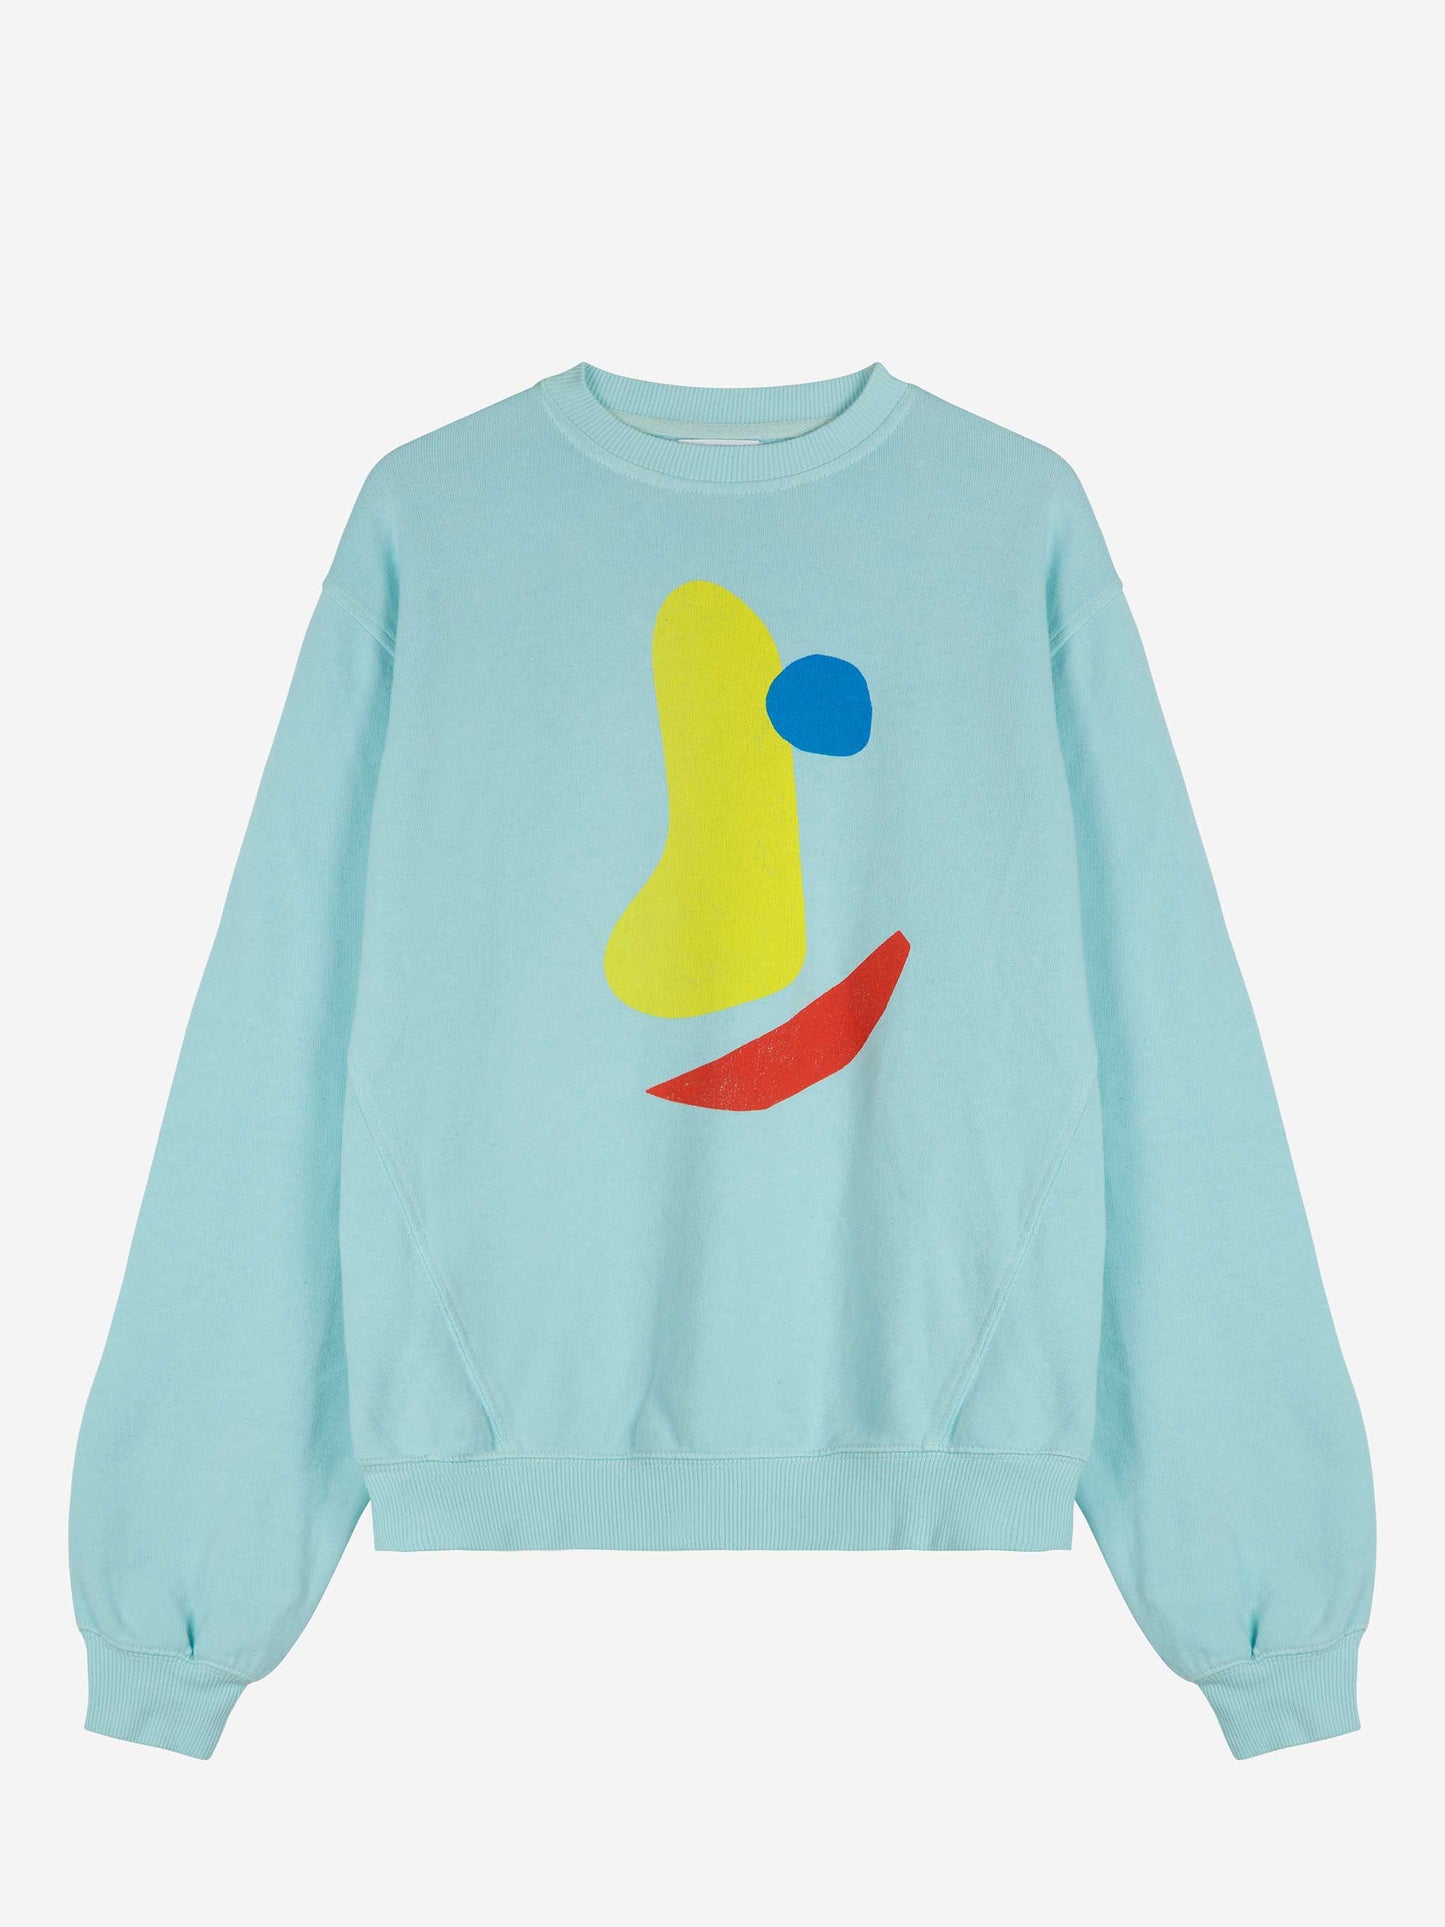 Smiling sweatshirt